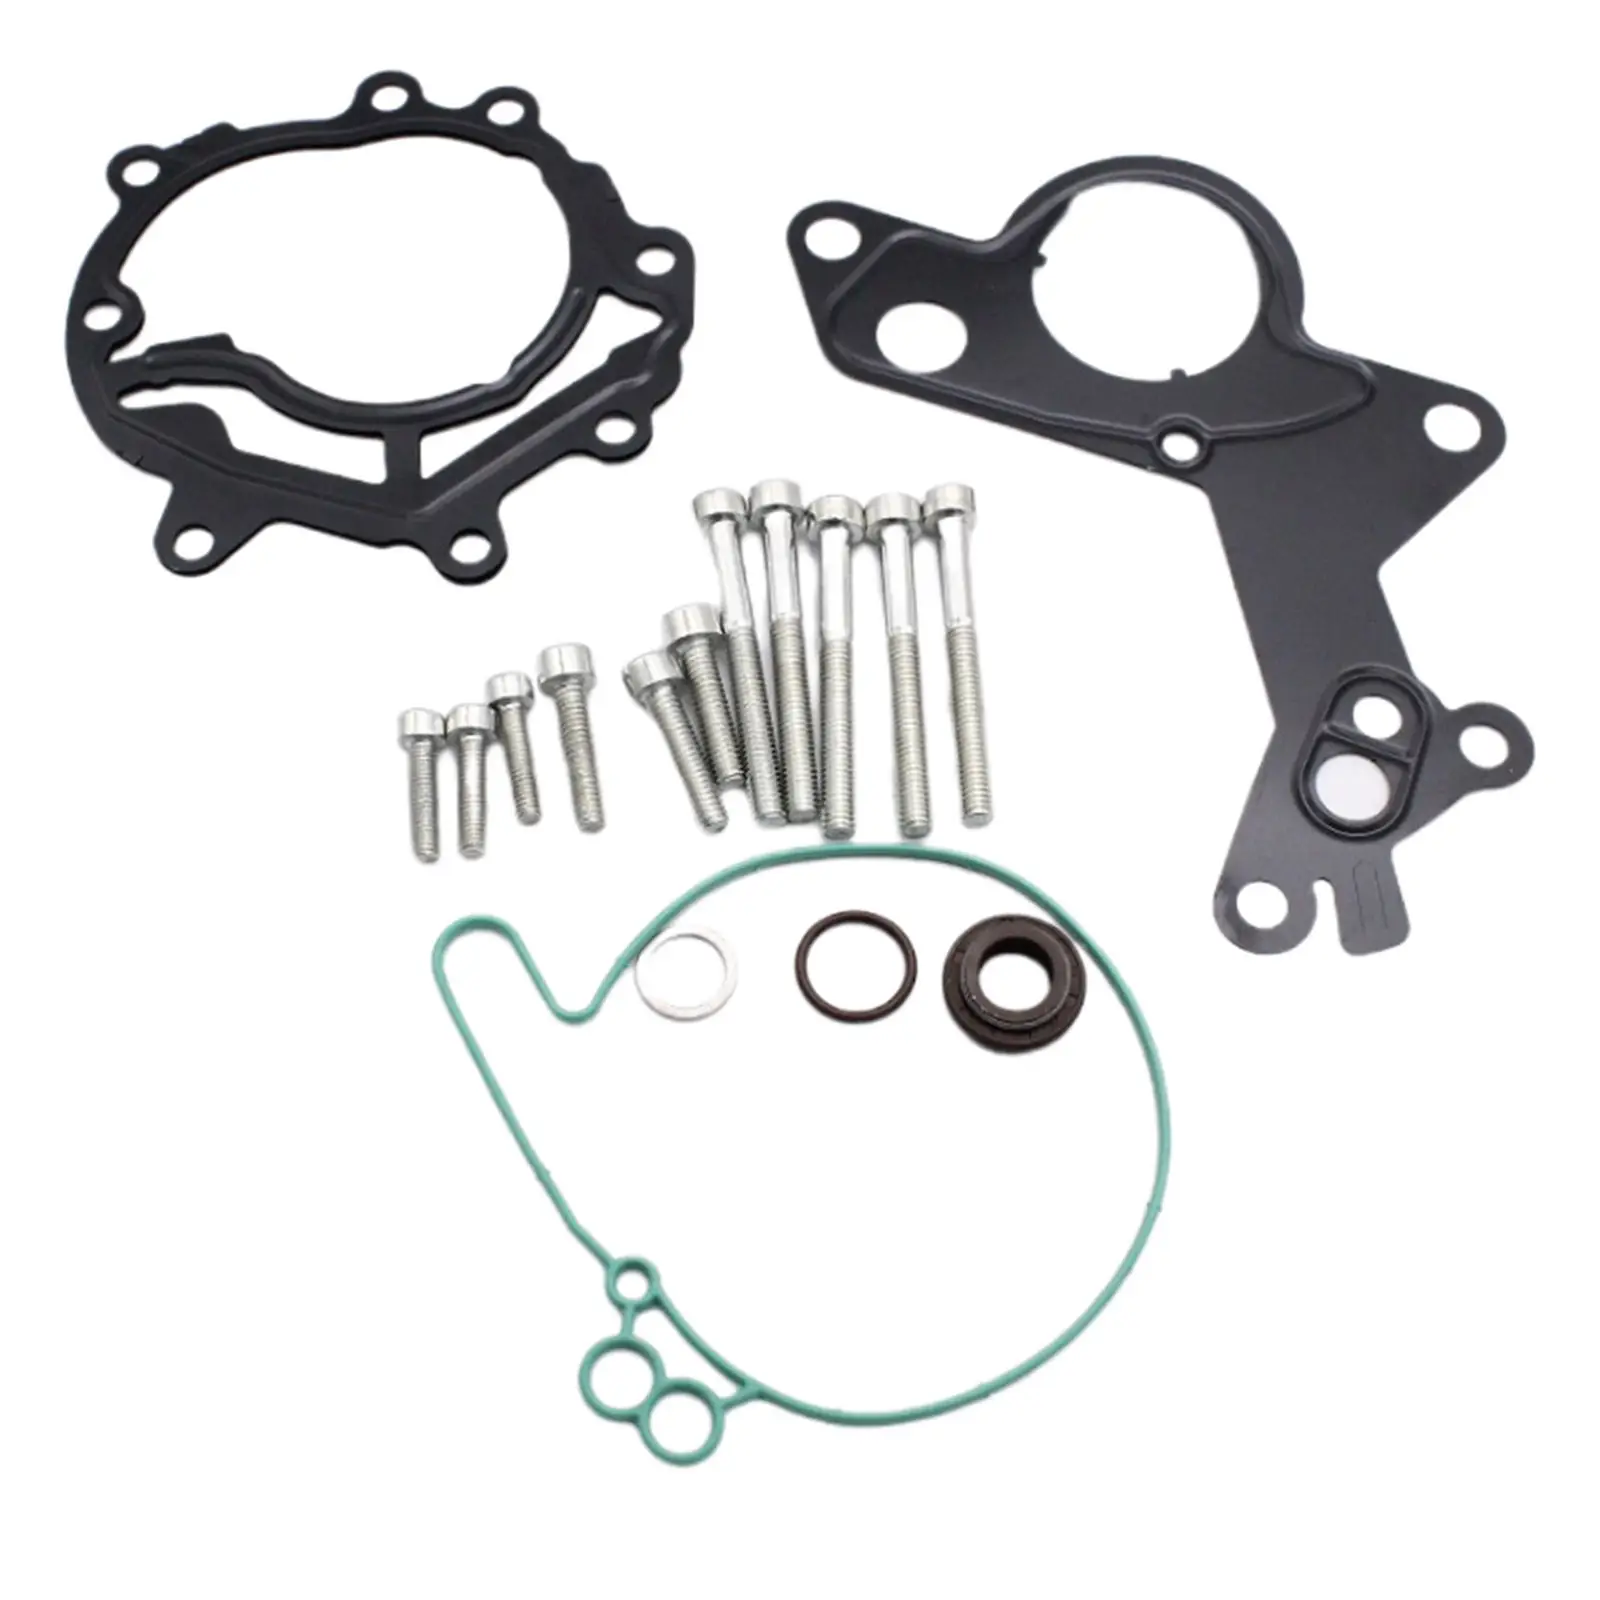 Vacuum Fuel Tandem Pump Repair Kit for VW Car Accessories 038145209 for Audi A2 A3 A4 A6 for Skoda